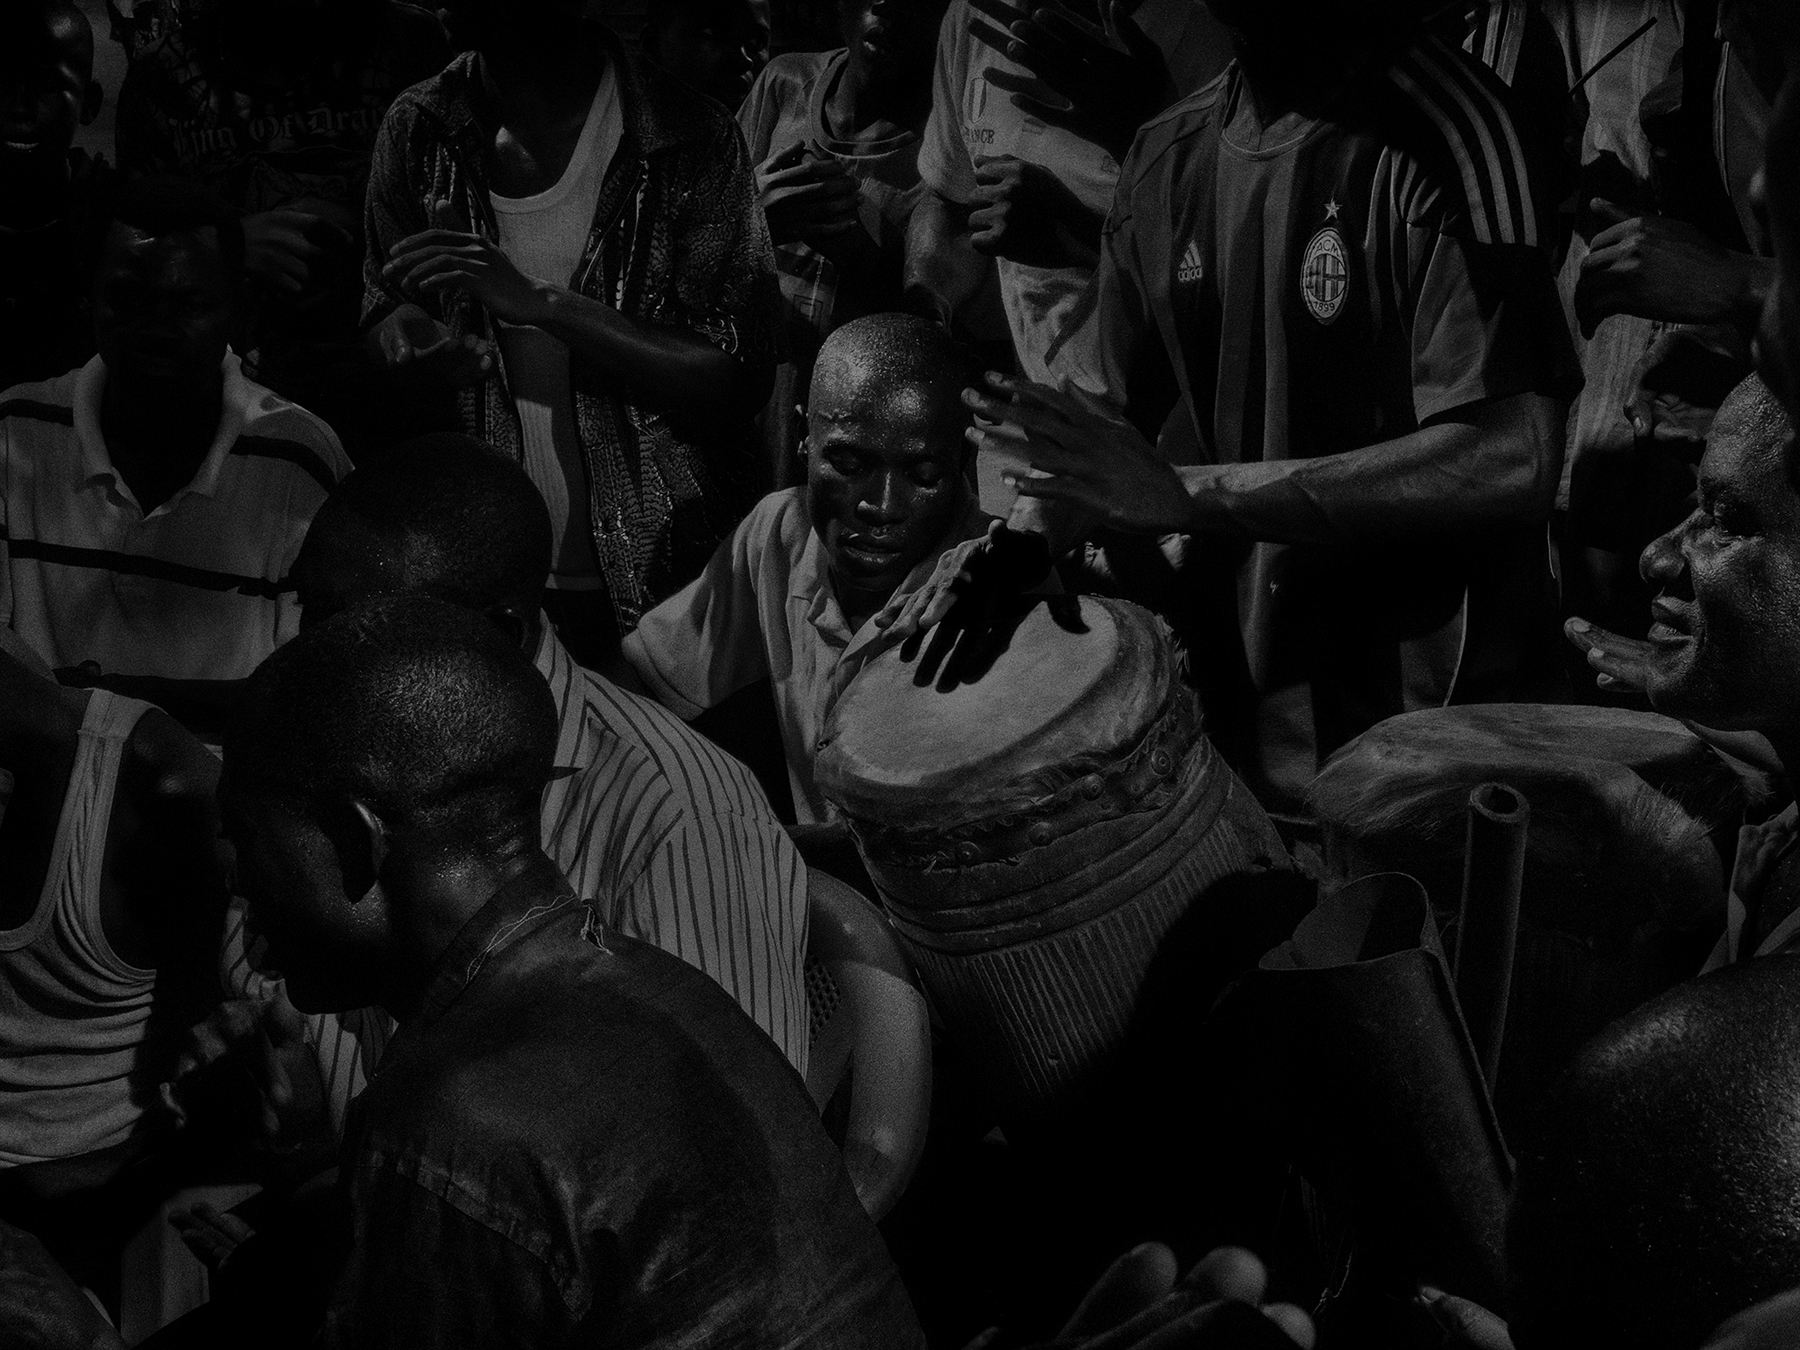 Alex Majoli - Scene #9857, Republic of Congo, 2013 - Howard Greenberg Gallery - 2019